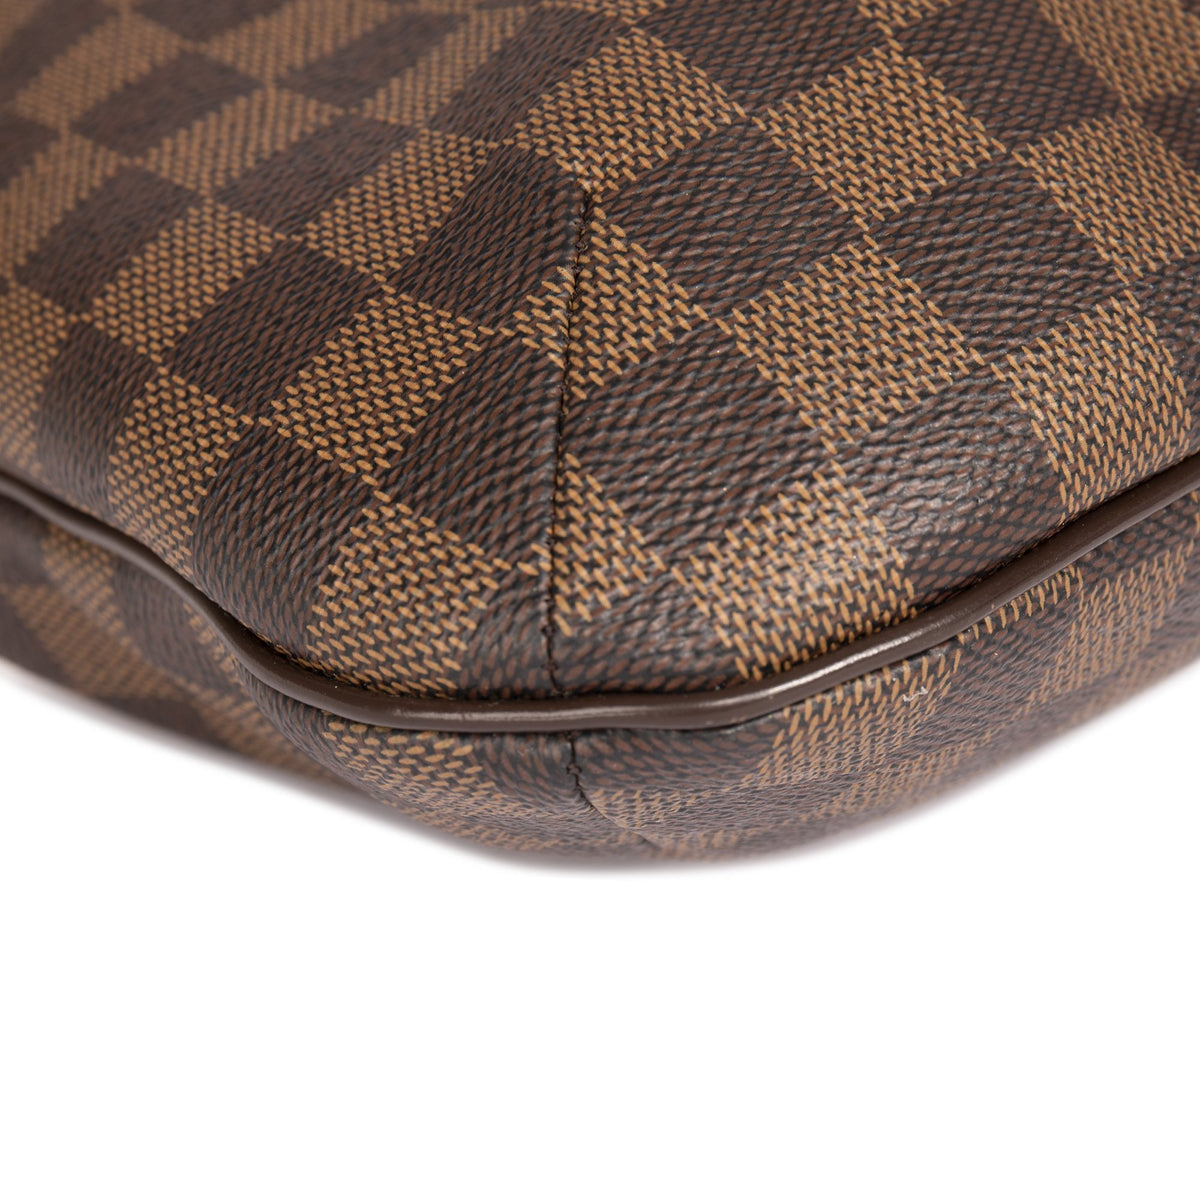 Louis-Vuitton Damier Ebene Bloomsbury PM Shoulder Bag